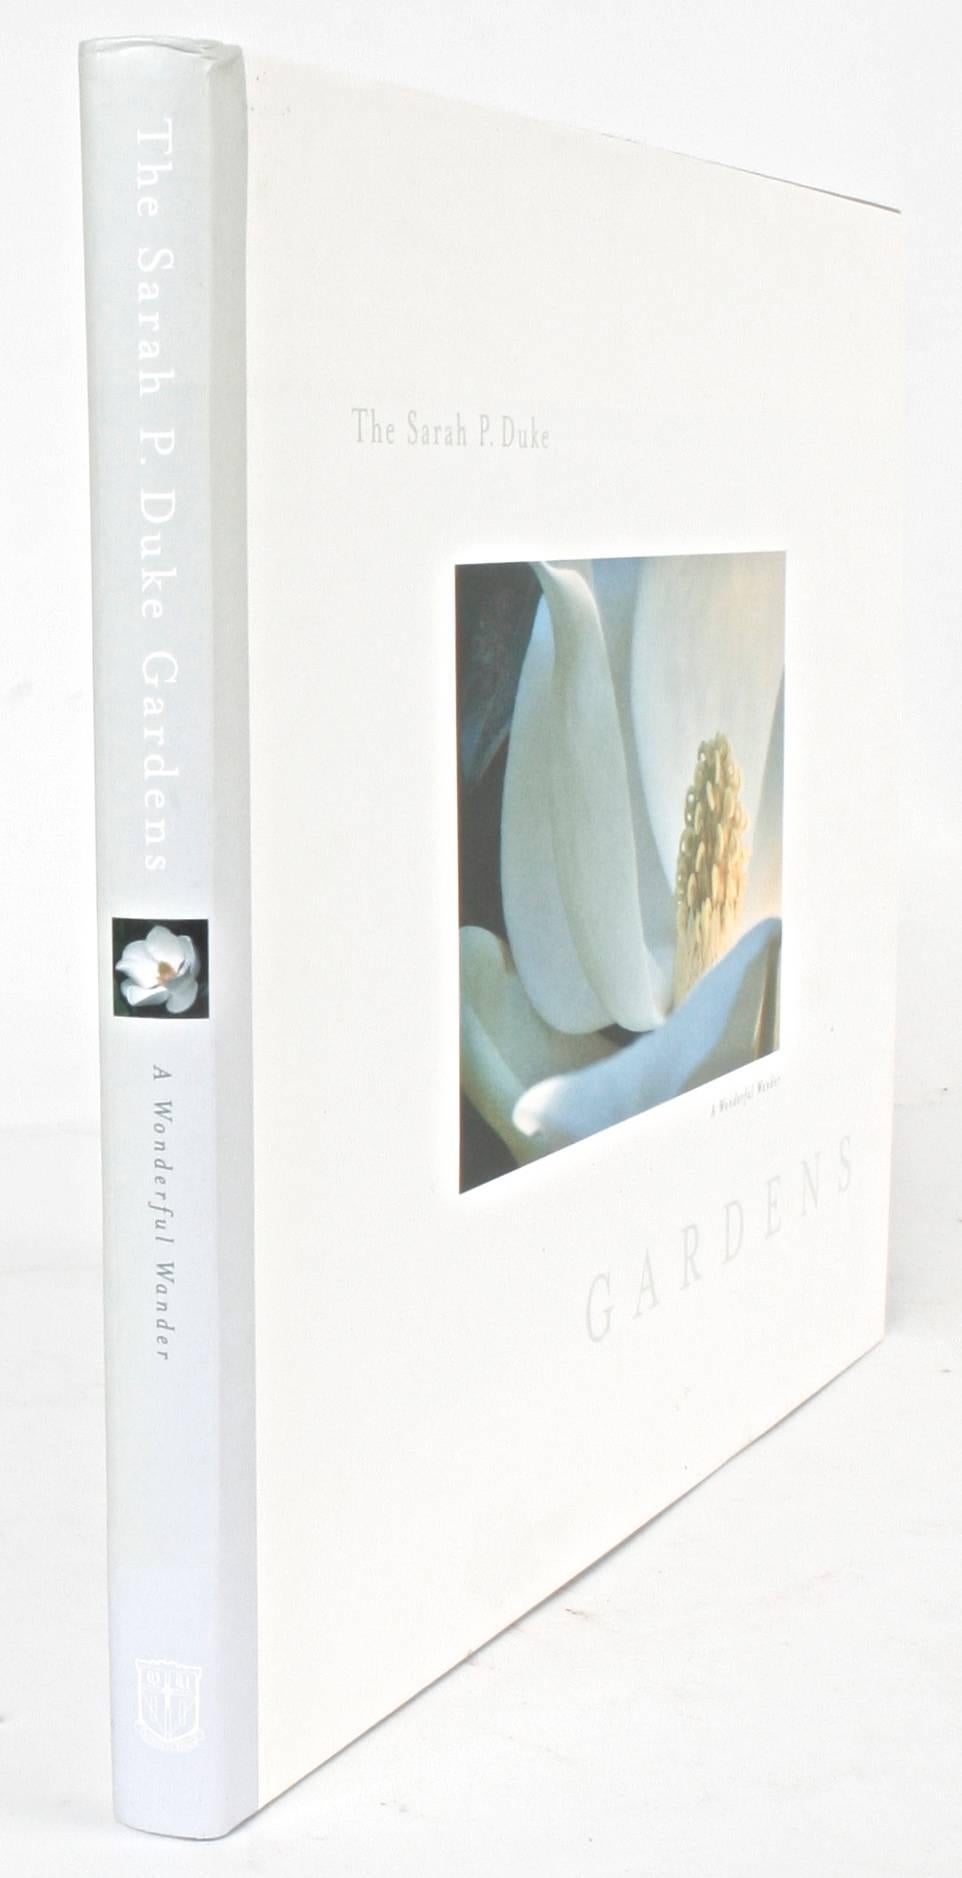 Sarah P. Duke Gardens, A Wonderful Wander, Erstausgabe im Angebot 10